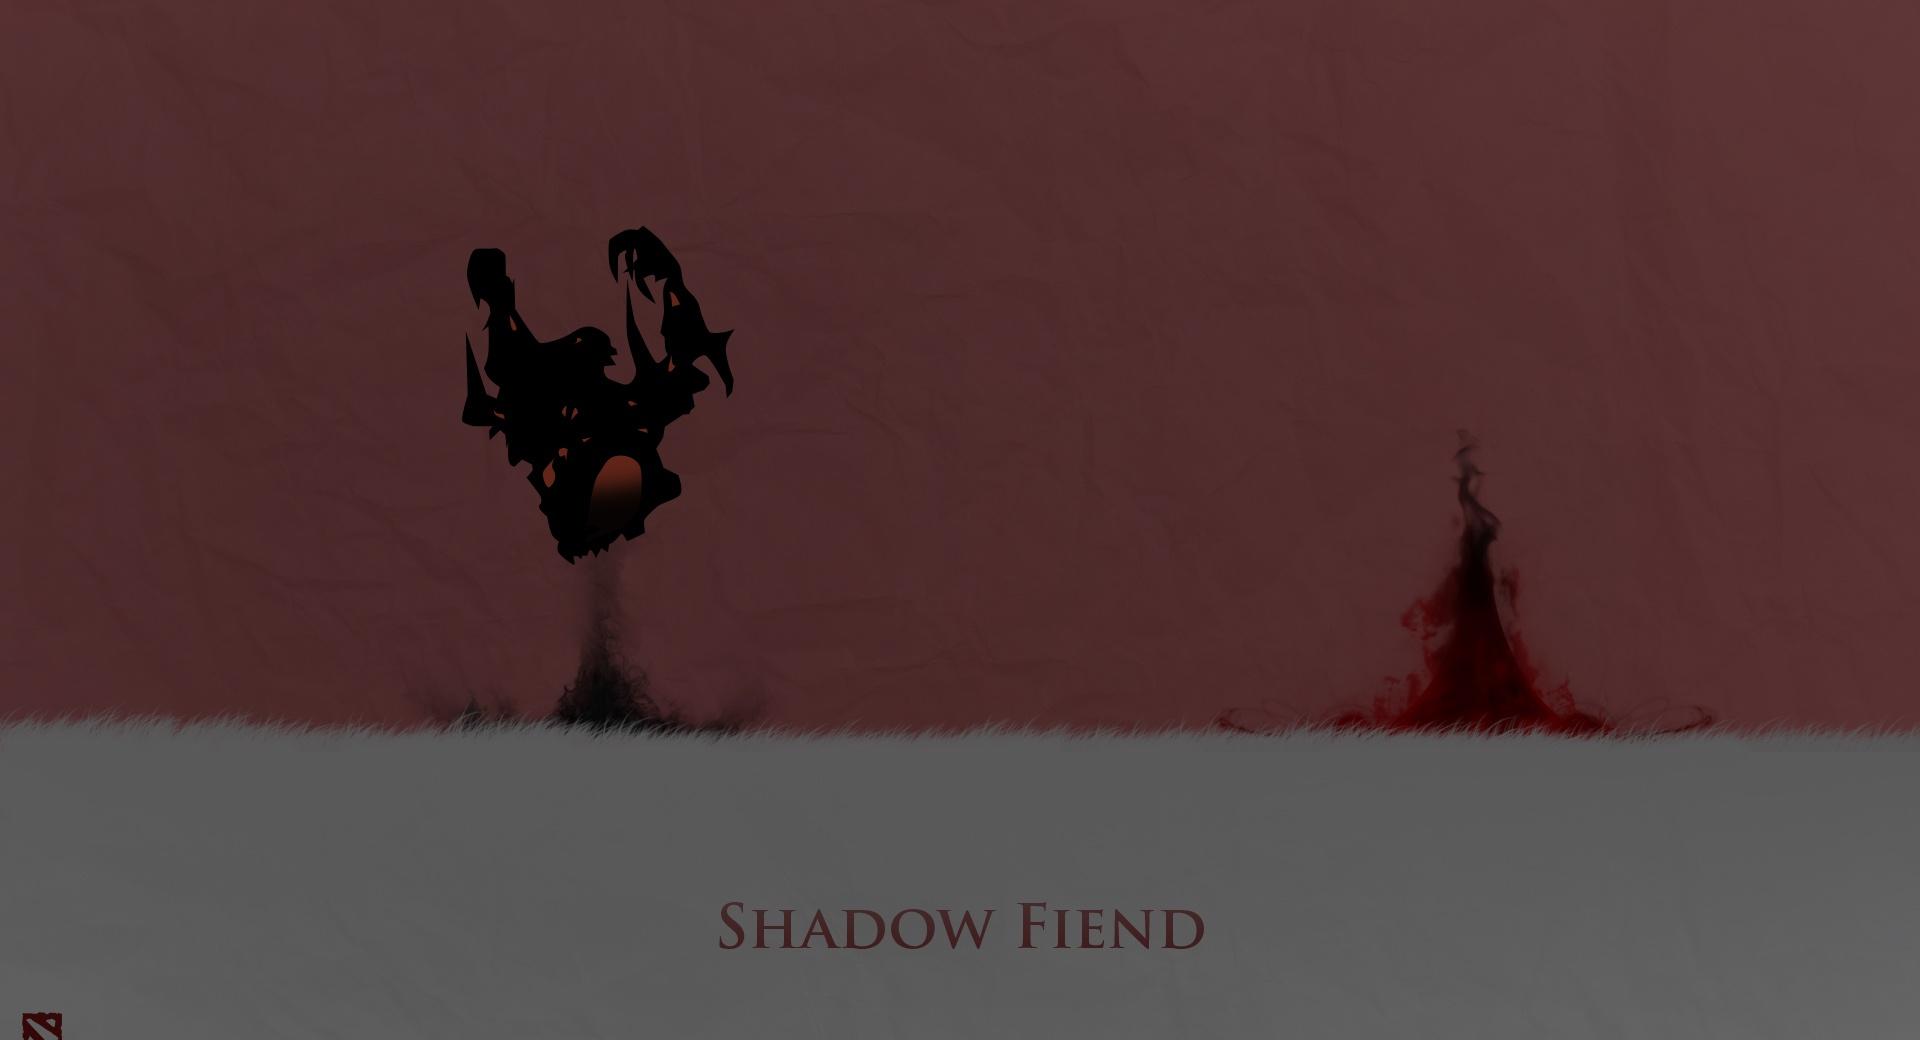 Shadow Fiend - DotA 2 at 2048 x 2048 iPad size wallpapers HD quality